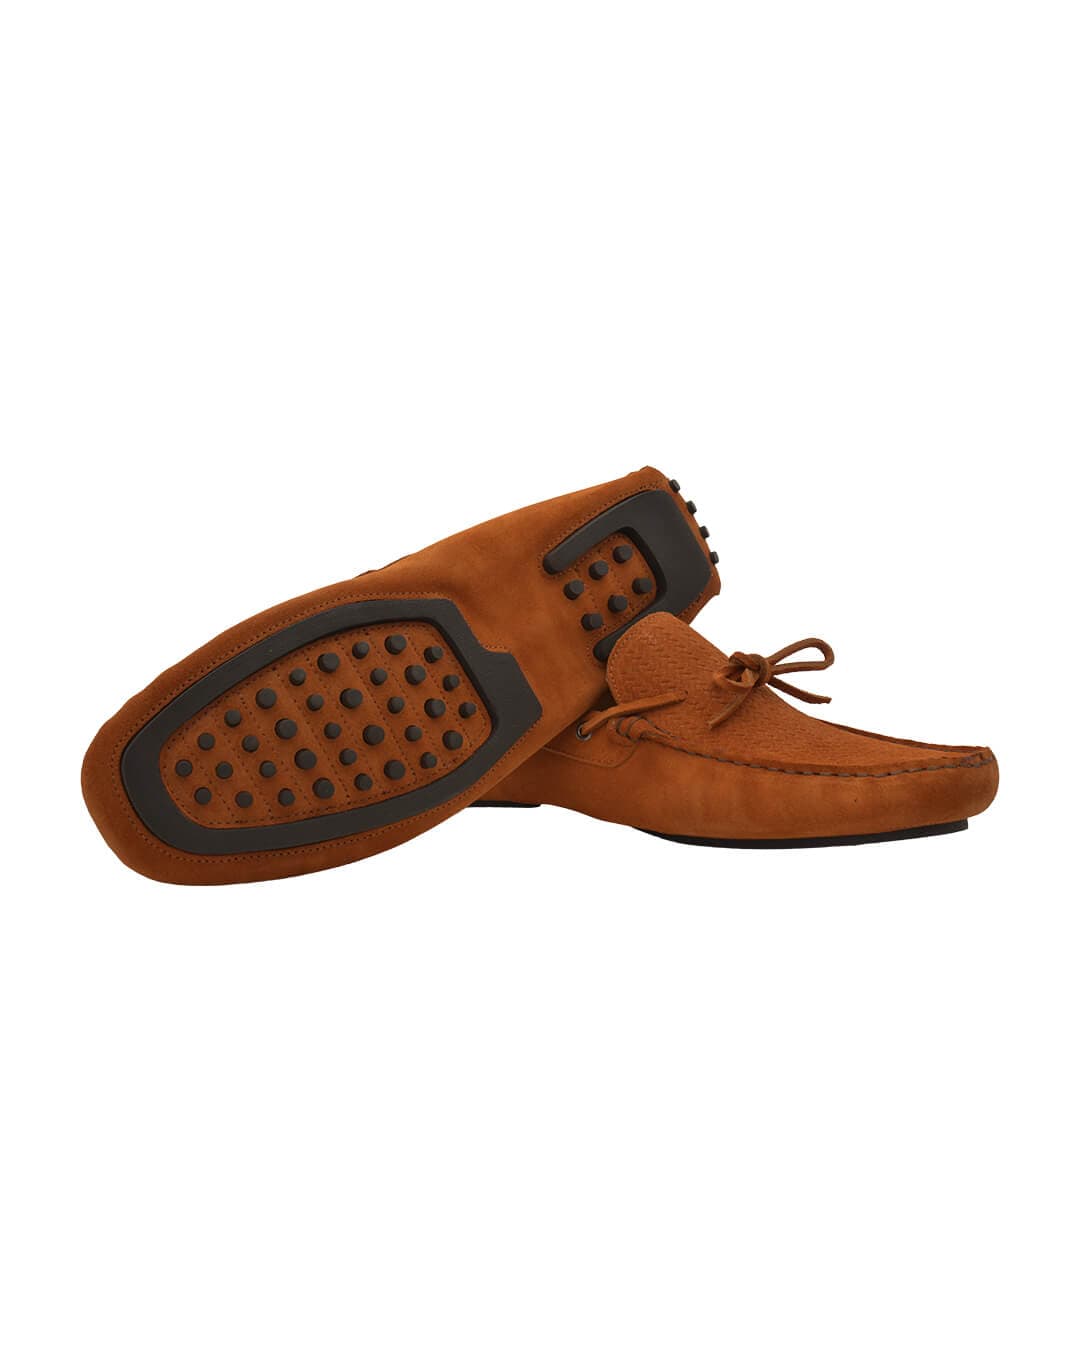 Gagliardi Shoes Gagliardi Orange Suede Loafers